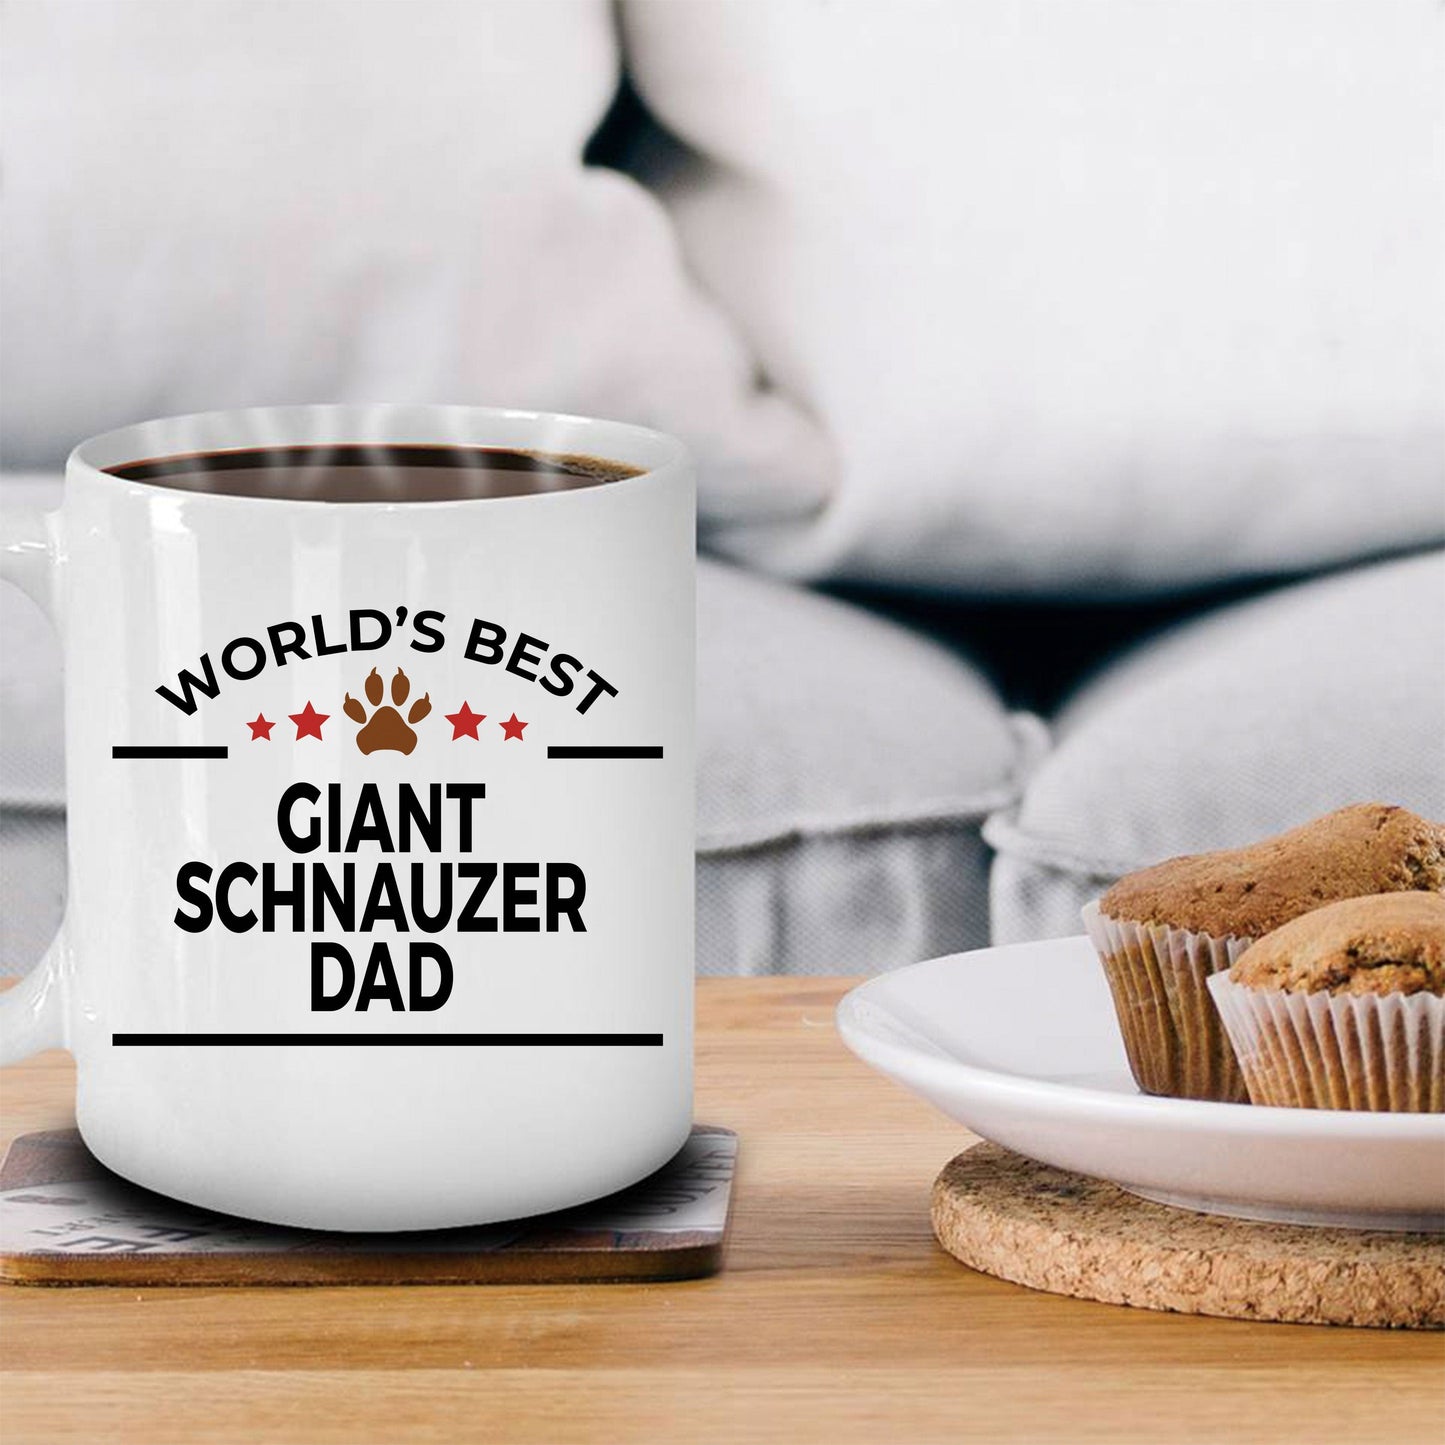 Giant Schnauzer Dog Lover Gift World's Best Dad Birthday Father's Day White Ceramic Coffee Mug